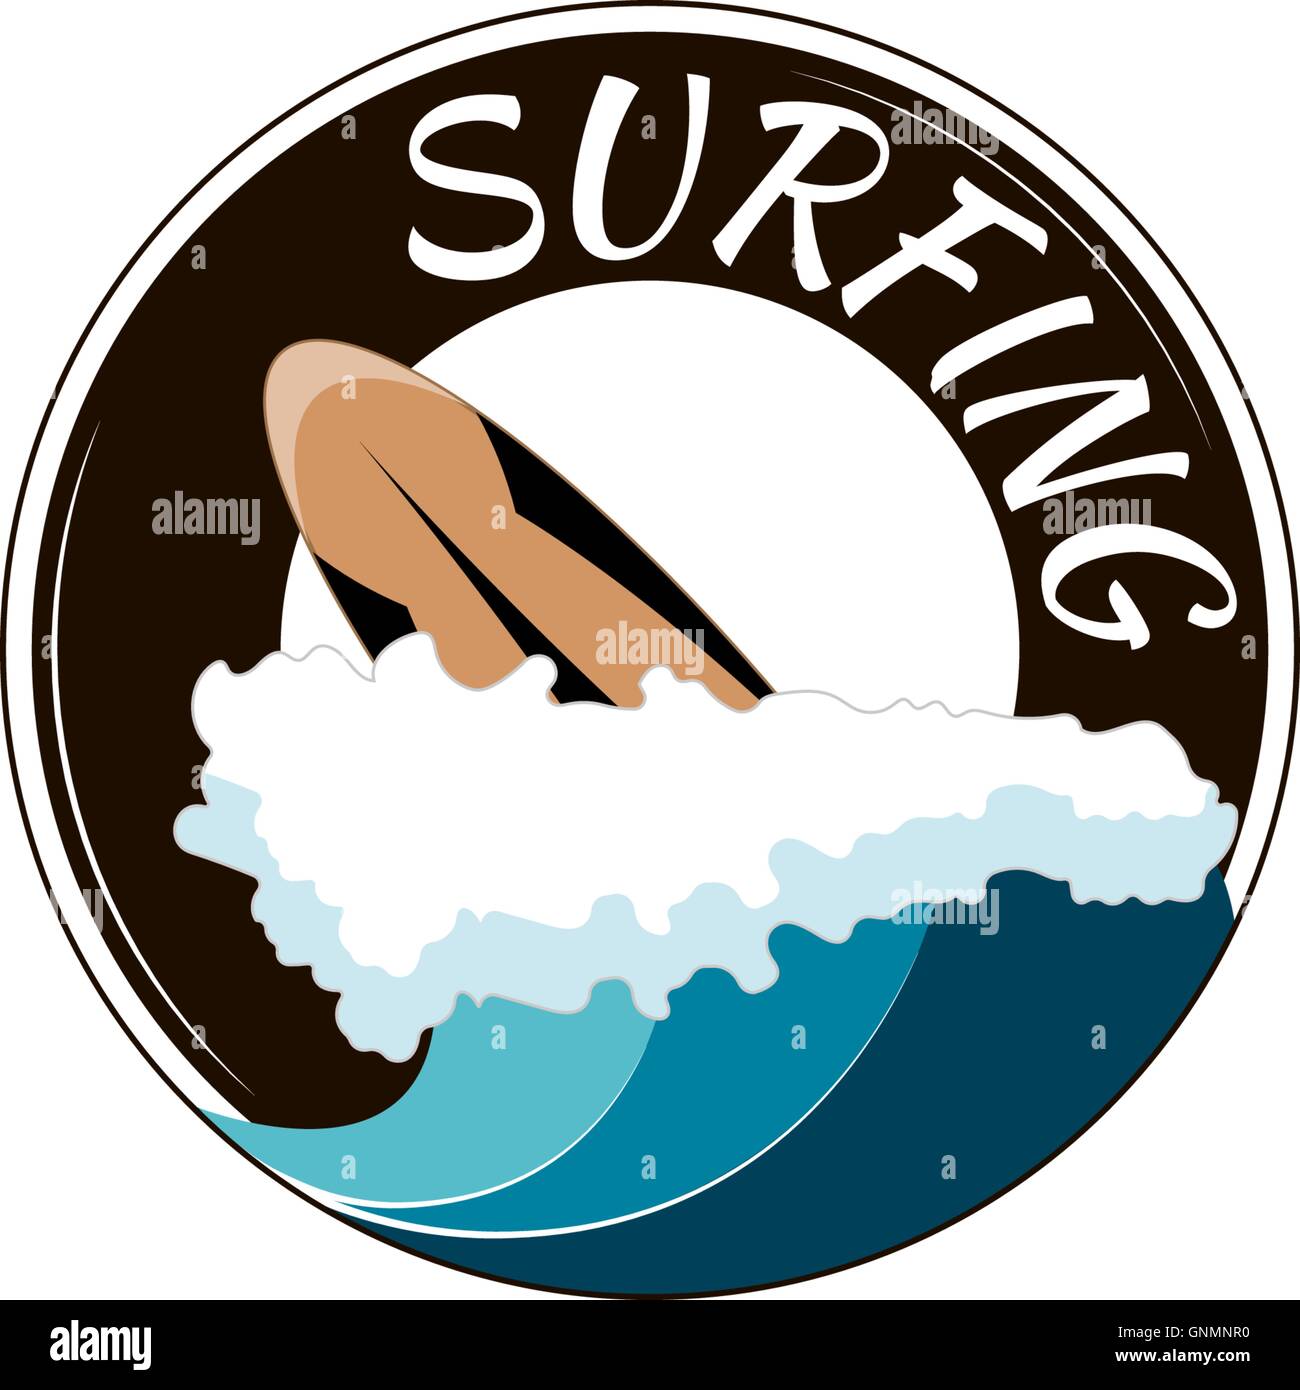 Surfing Company Logos